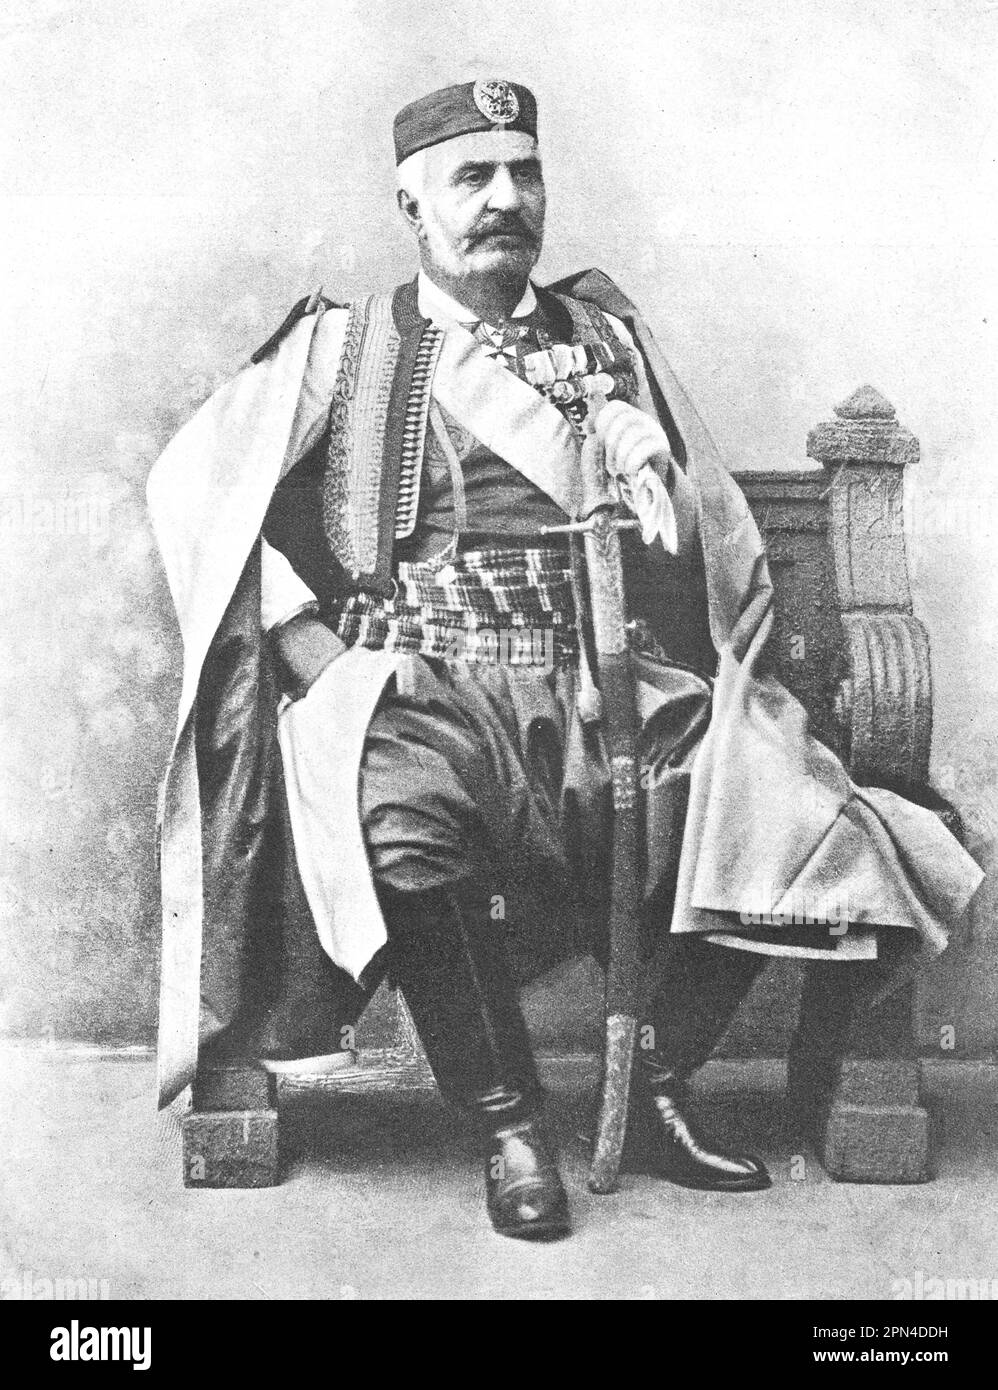 Prince Nicholas I of Montenegro. Photo from 1910. Stock Photo